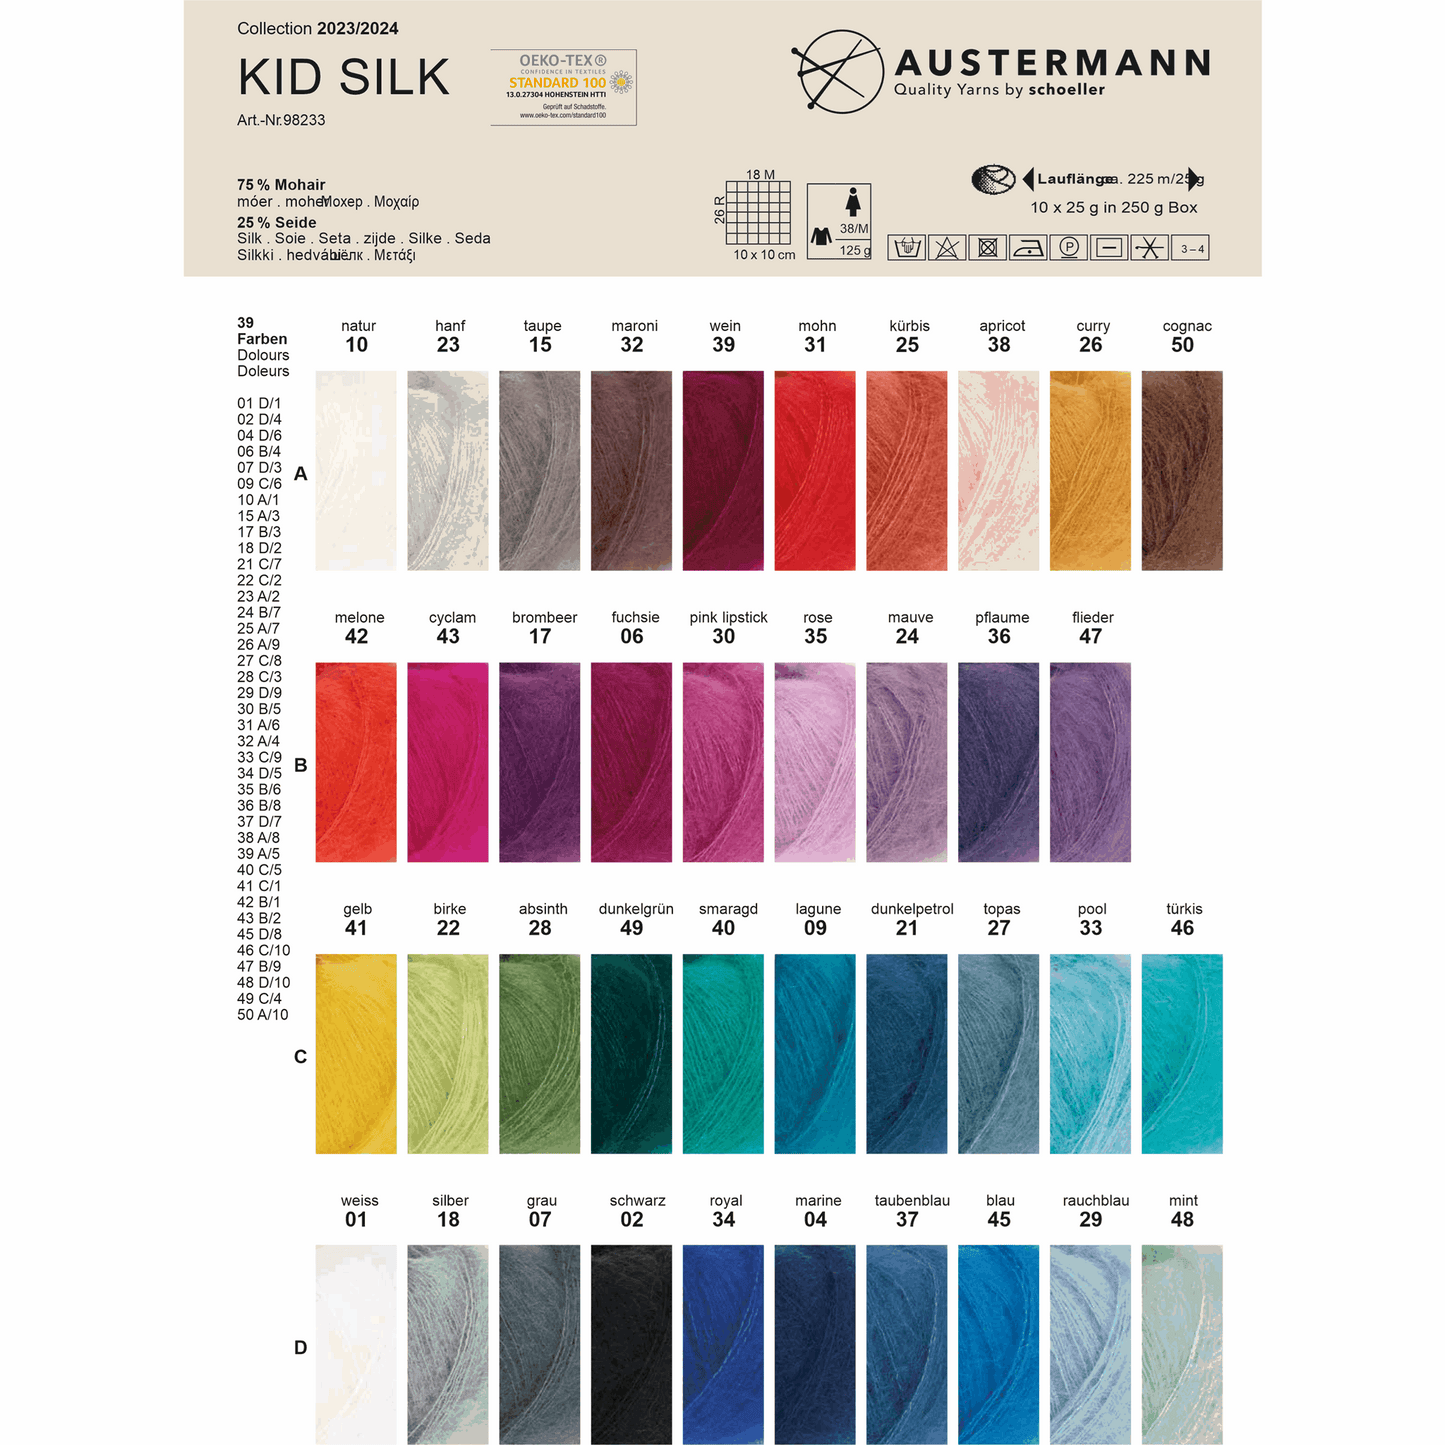 Schoeller-Austermann Kid Silk,  25G, 98233, Farbe  10